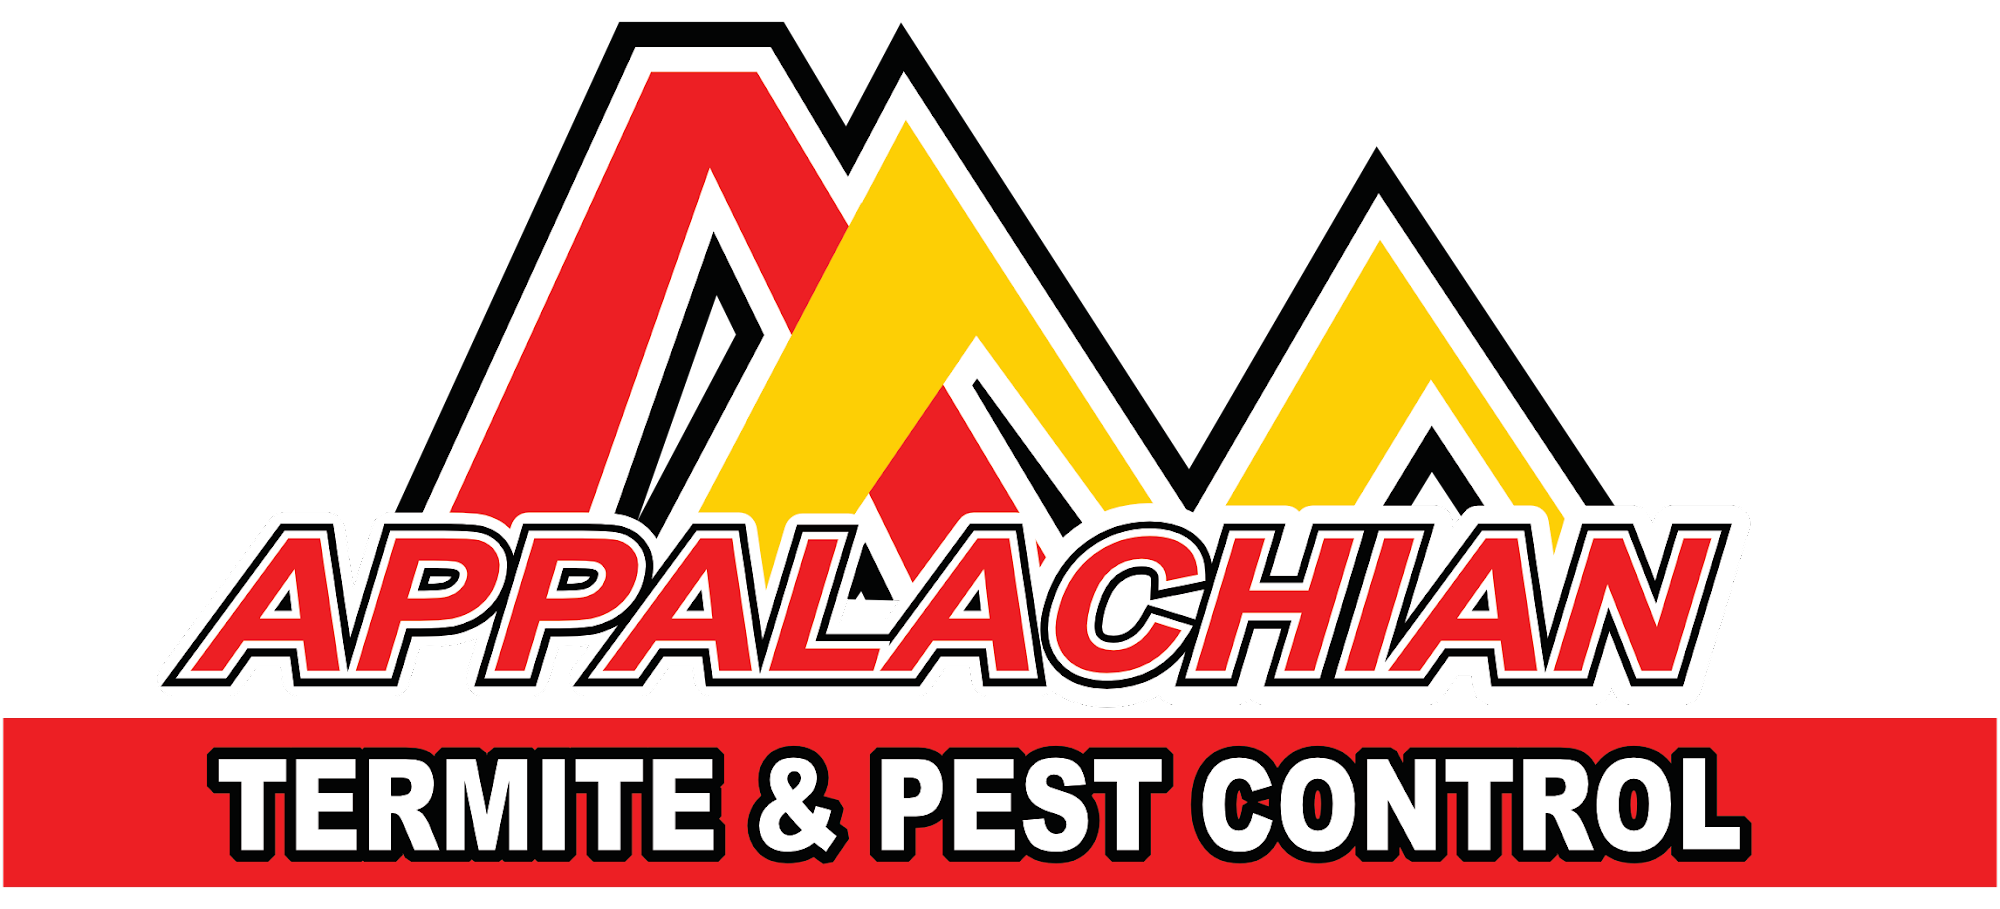 Appalachian Termite and Pest Control, LLC 677 B Fairmont Rd, Westover West Virginia 26501